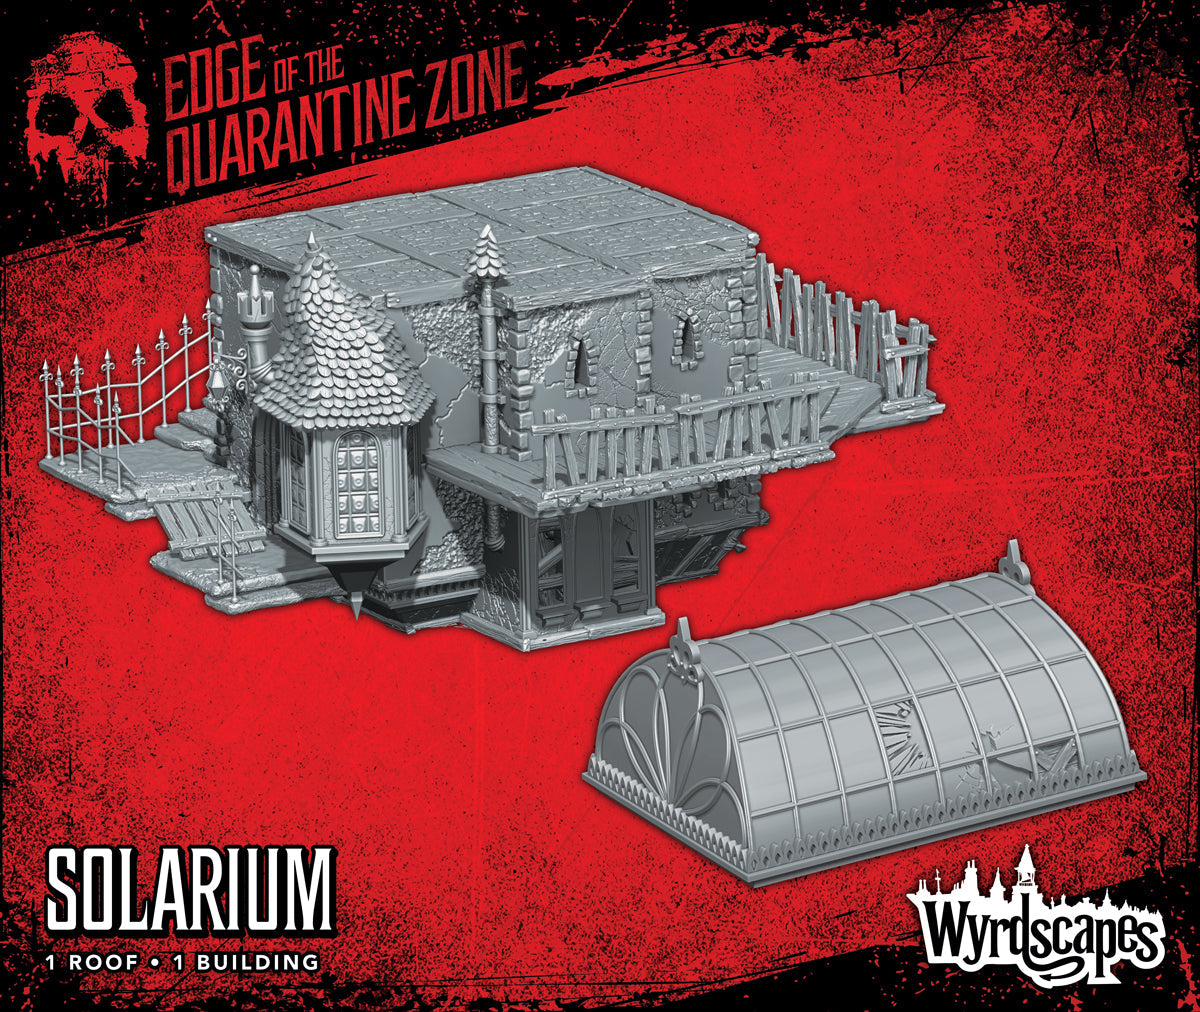 Wyrdscapes Edge of the Quarantine Zone: Solarium | Grognard Games